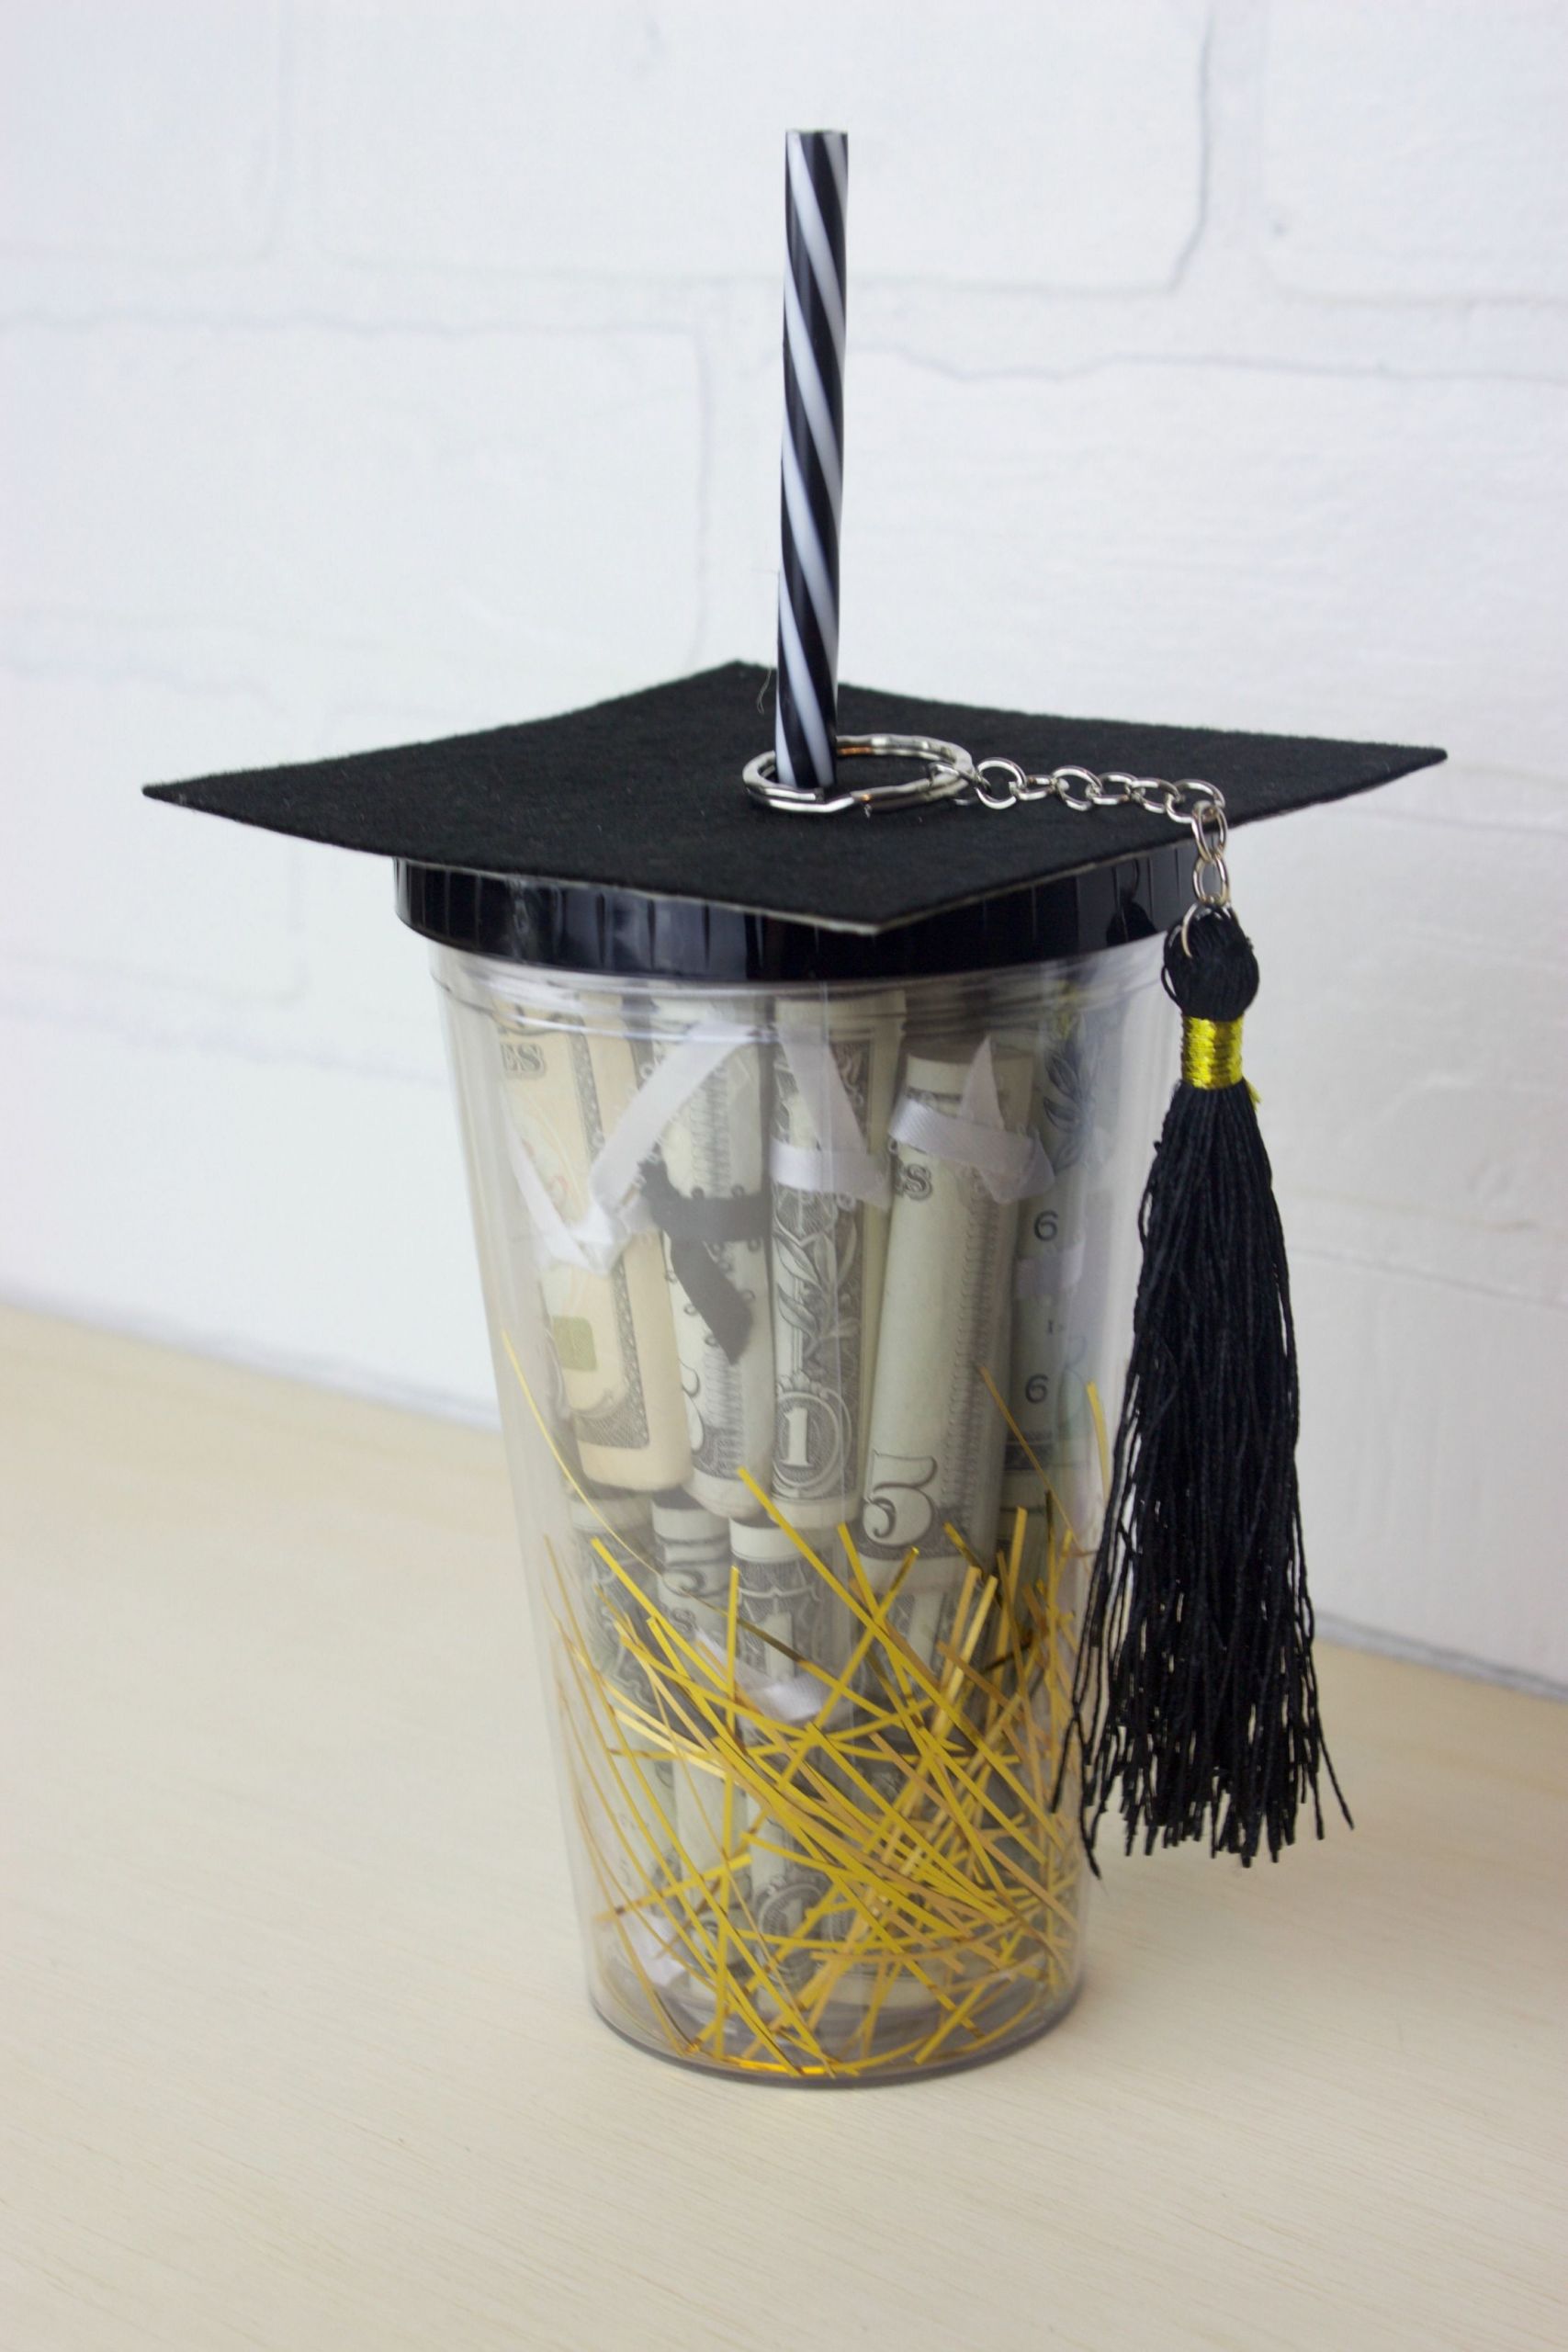 Cheap Graduation Gift Ideas
 DIY Graduation Gift in a Cup